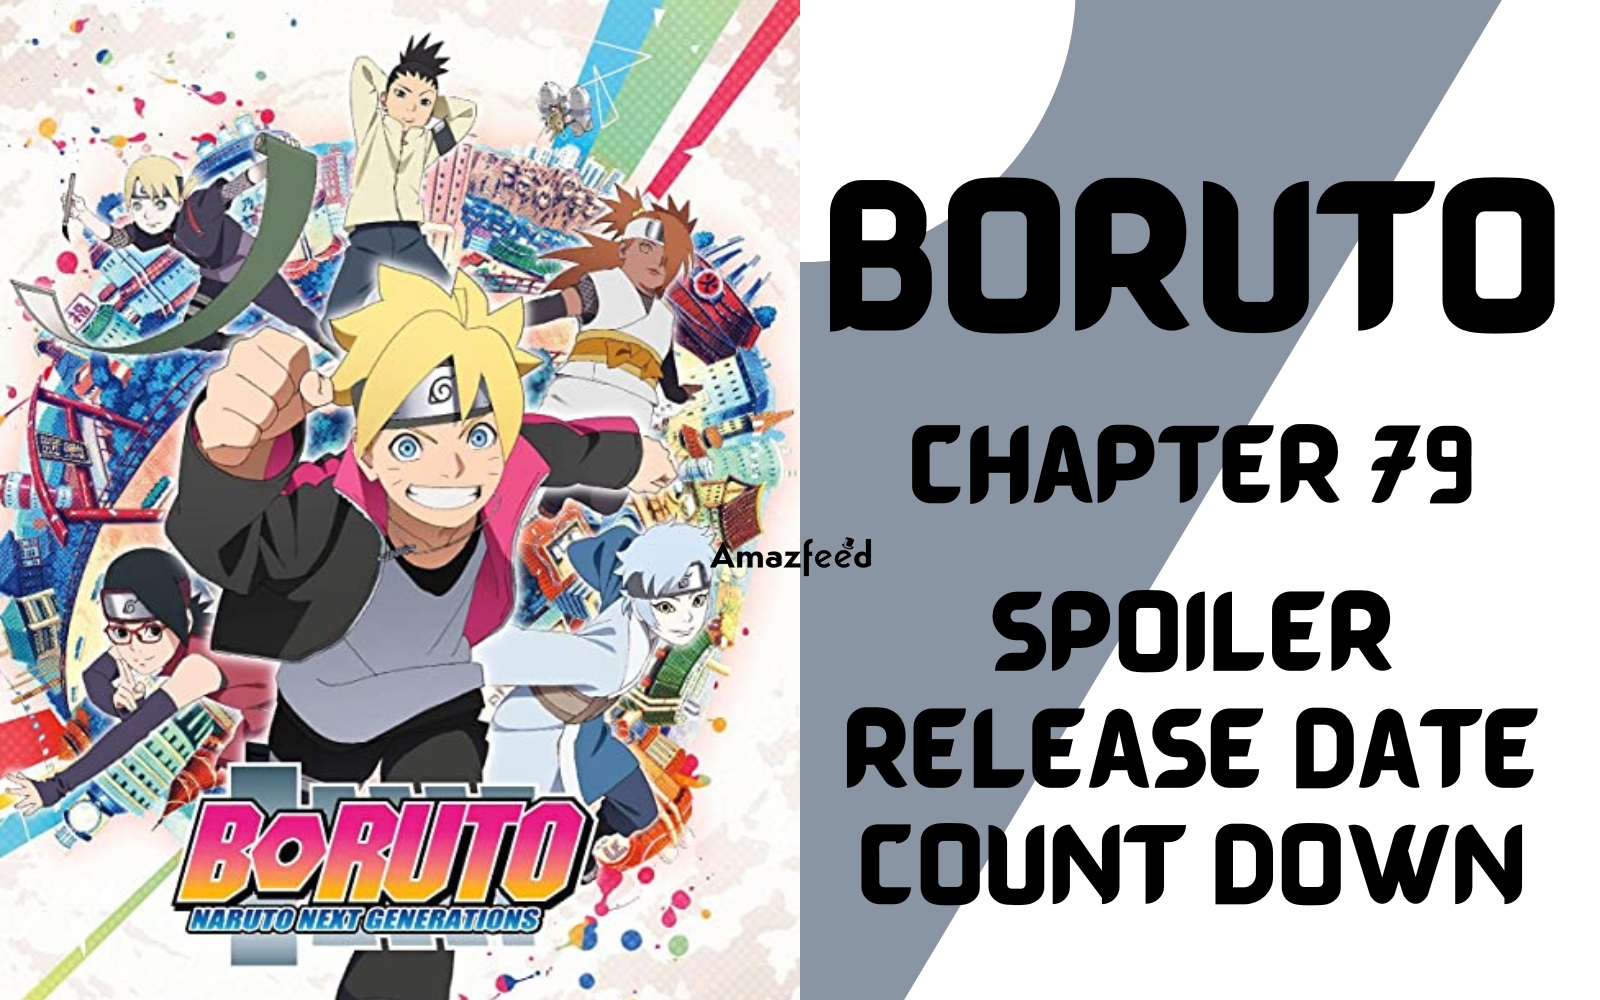 Boruto chapter 79 Release Date: 'Boruto' manga series chapter 79